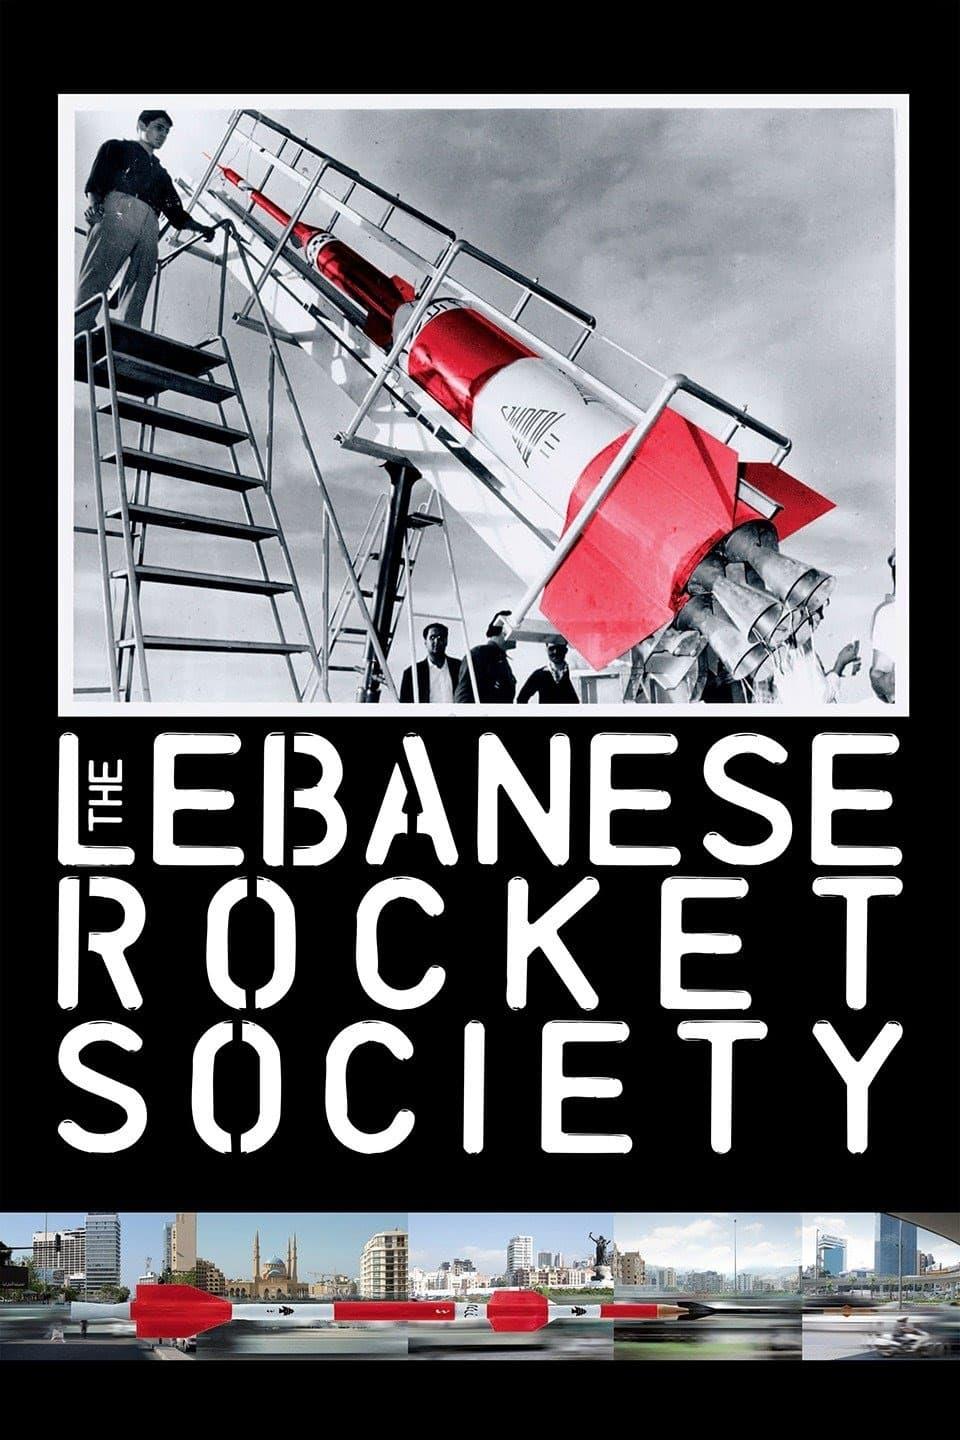 The Lebanese Rocket Society poster